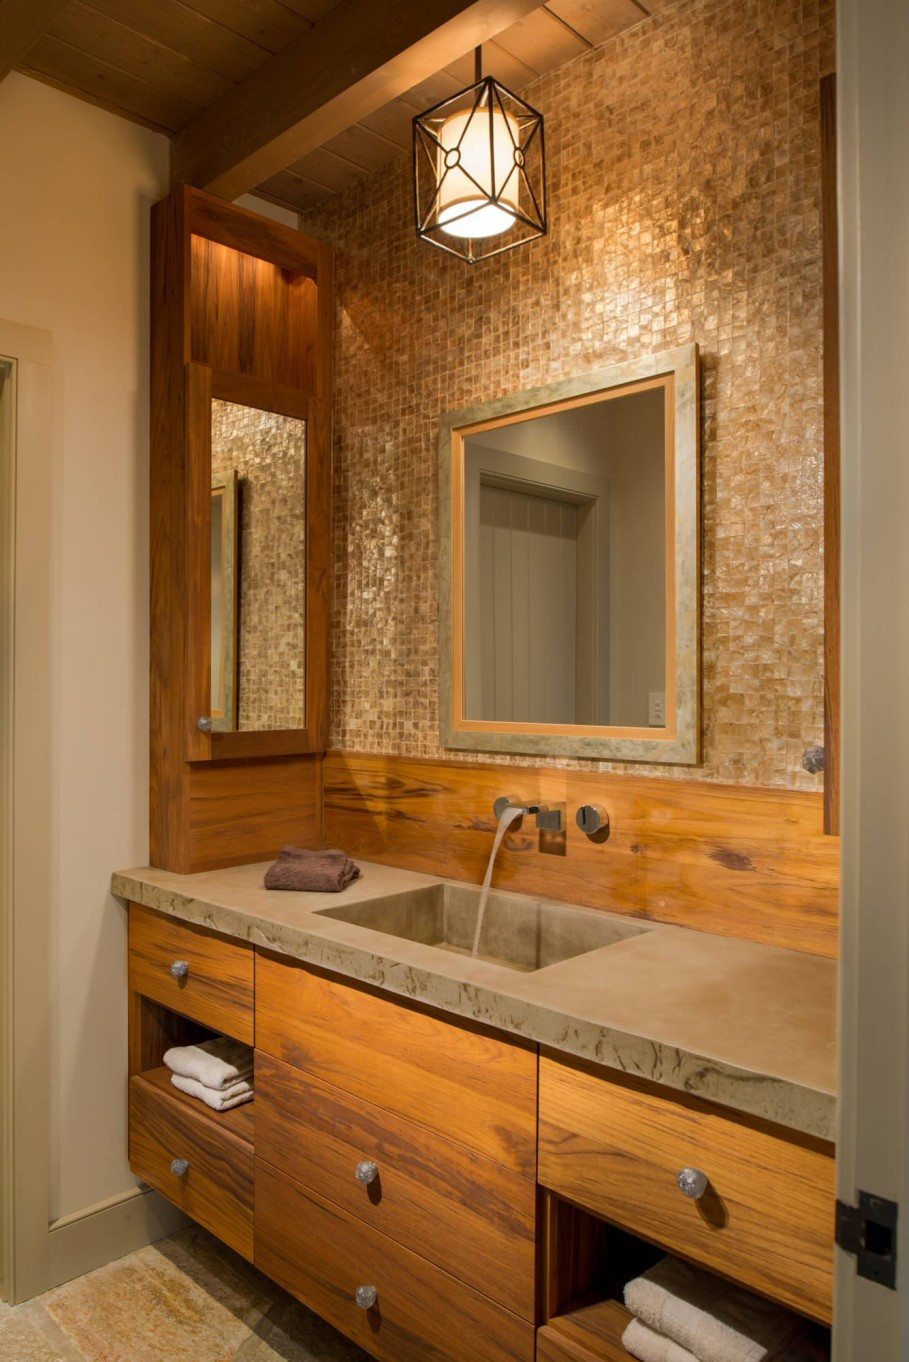 Bathroom Pendant Lights Over Vanity
 Bathroom Pendant Lighting and How to Incorporate It into